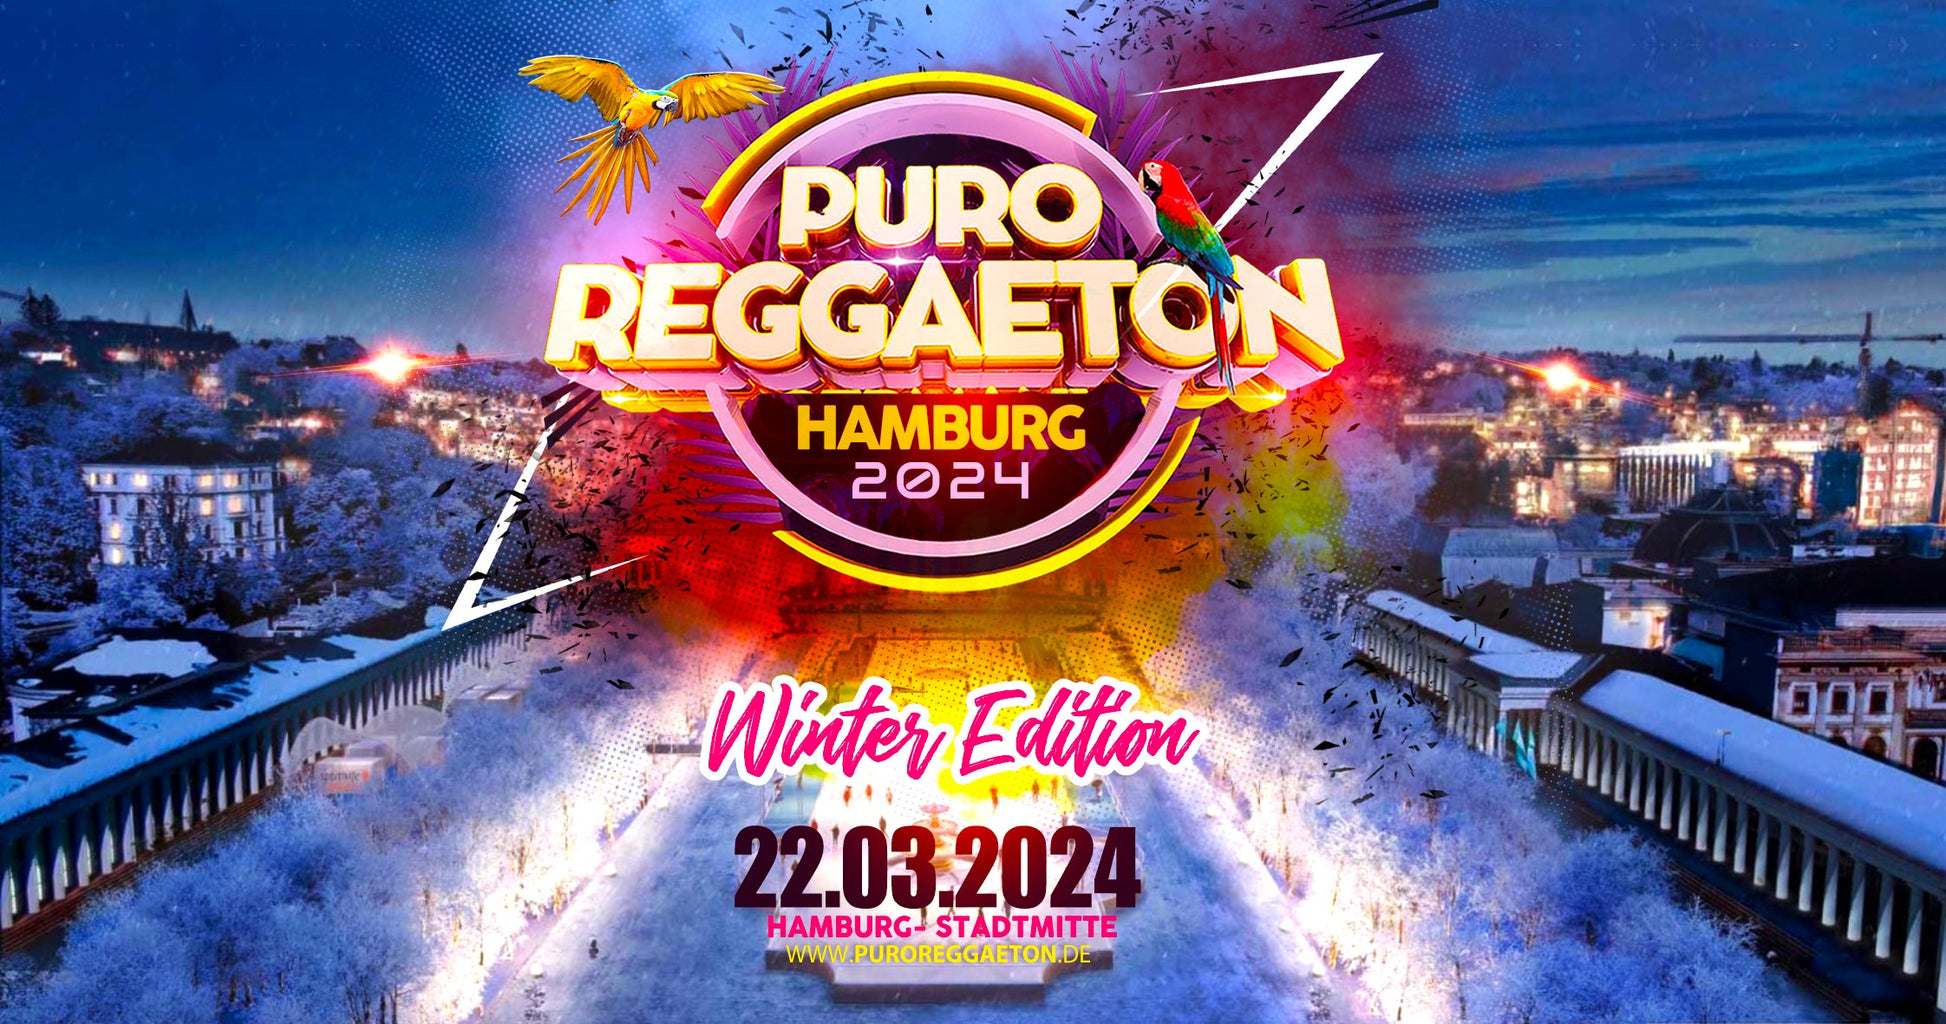 Hamburg - Puro Reggaeton Winter Edition - PURO REGGAETON